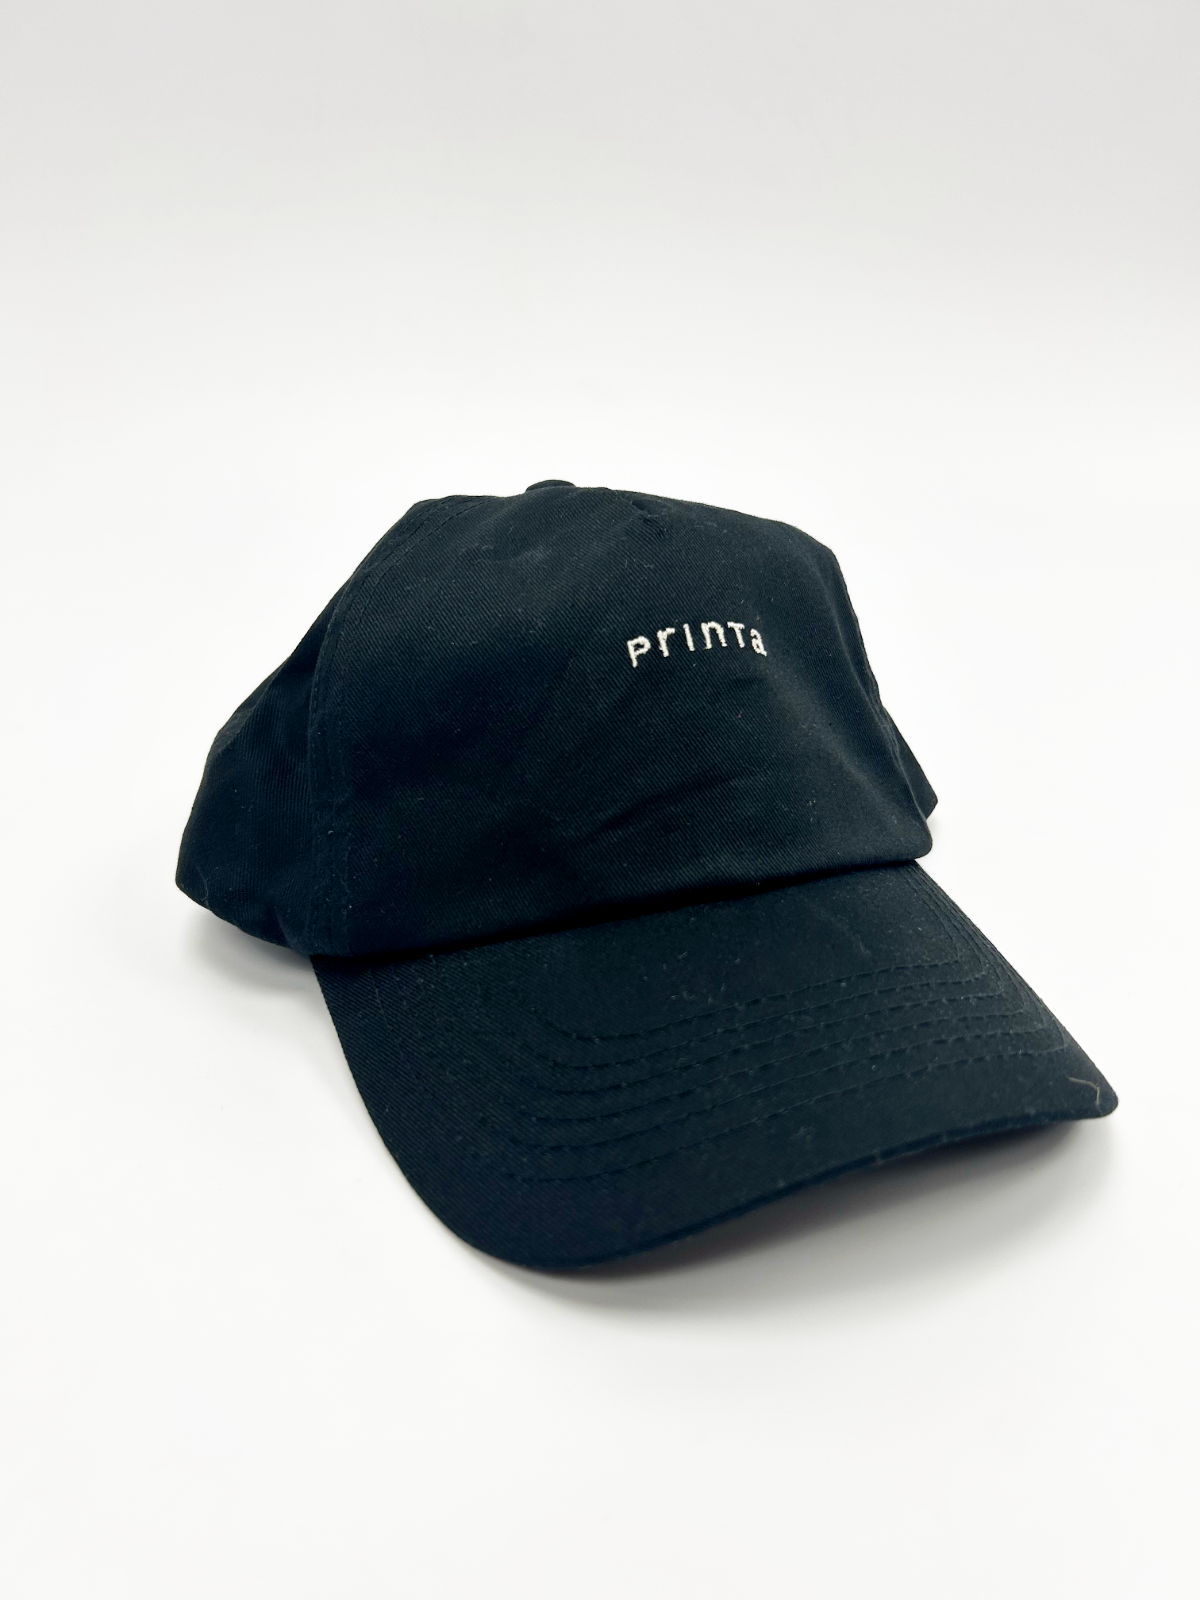 "Printa" black embroidered baseball cap